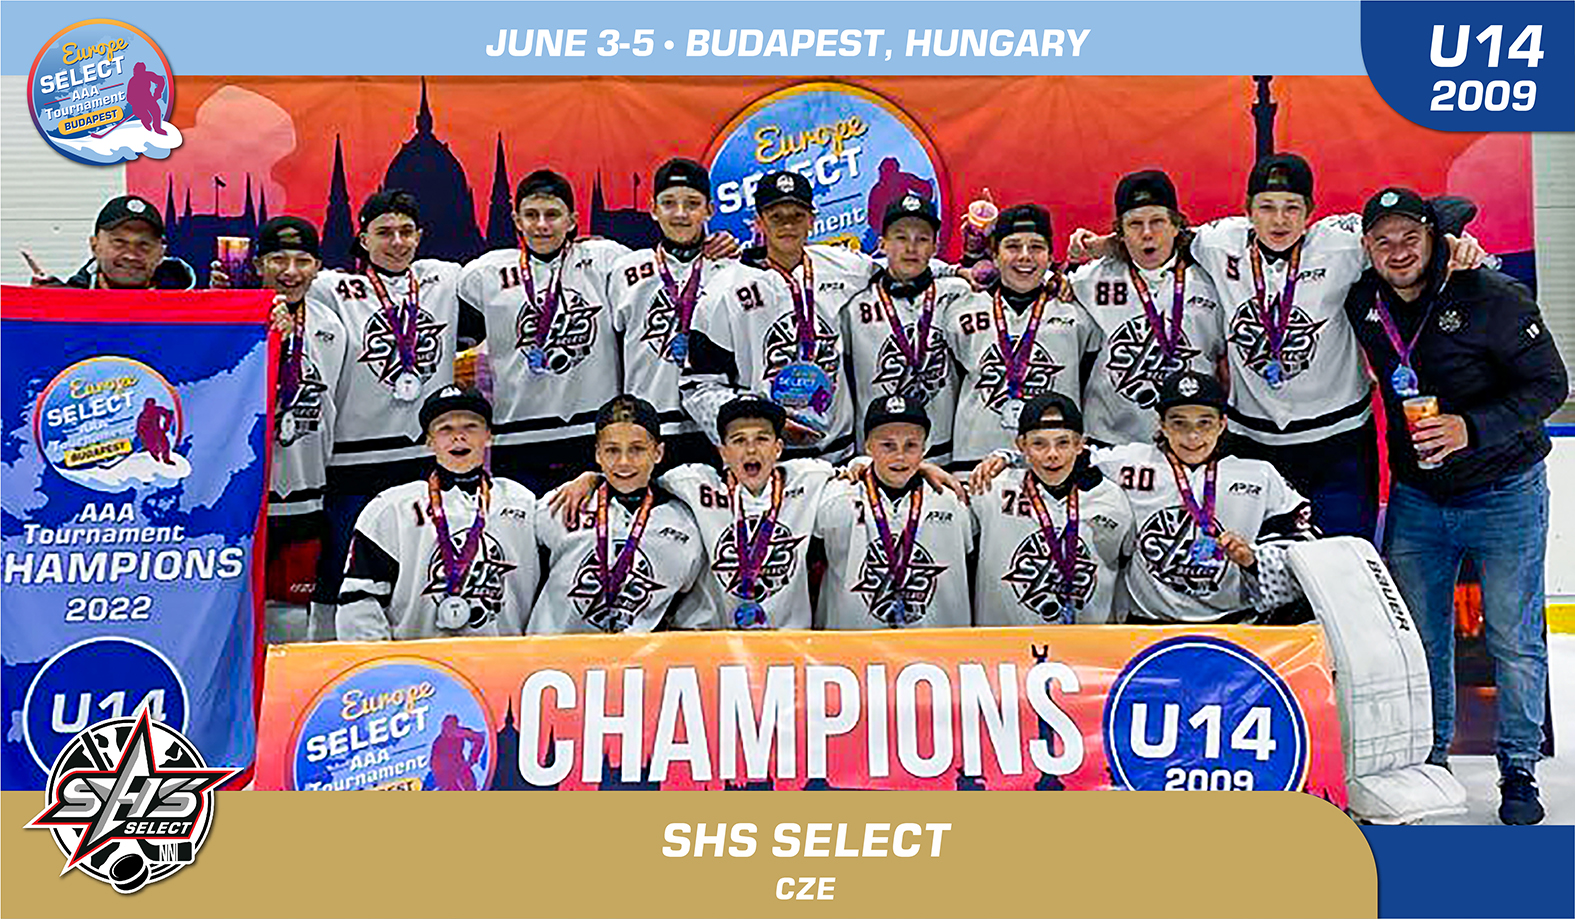 Český SHS Select vyhrál turnaj U14 Europe Select!